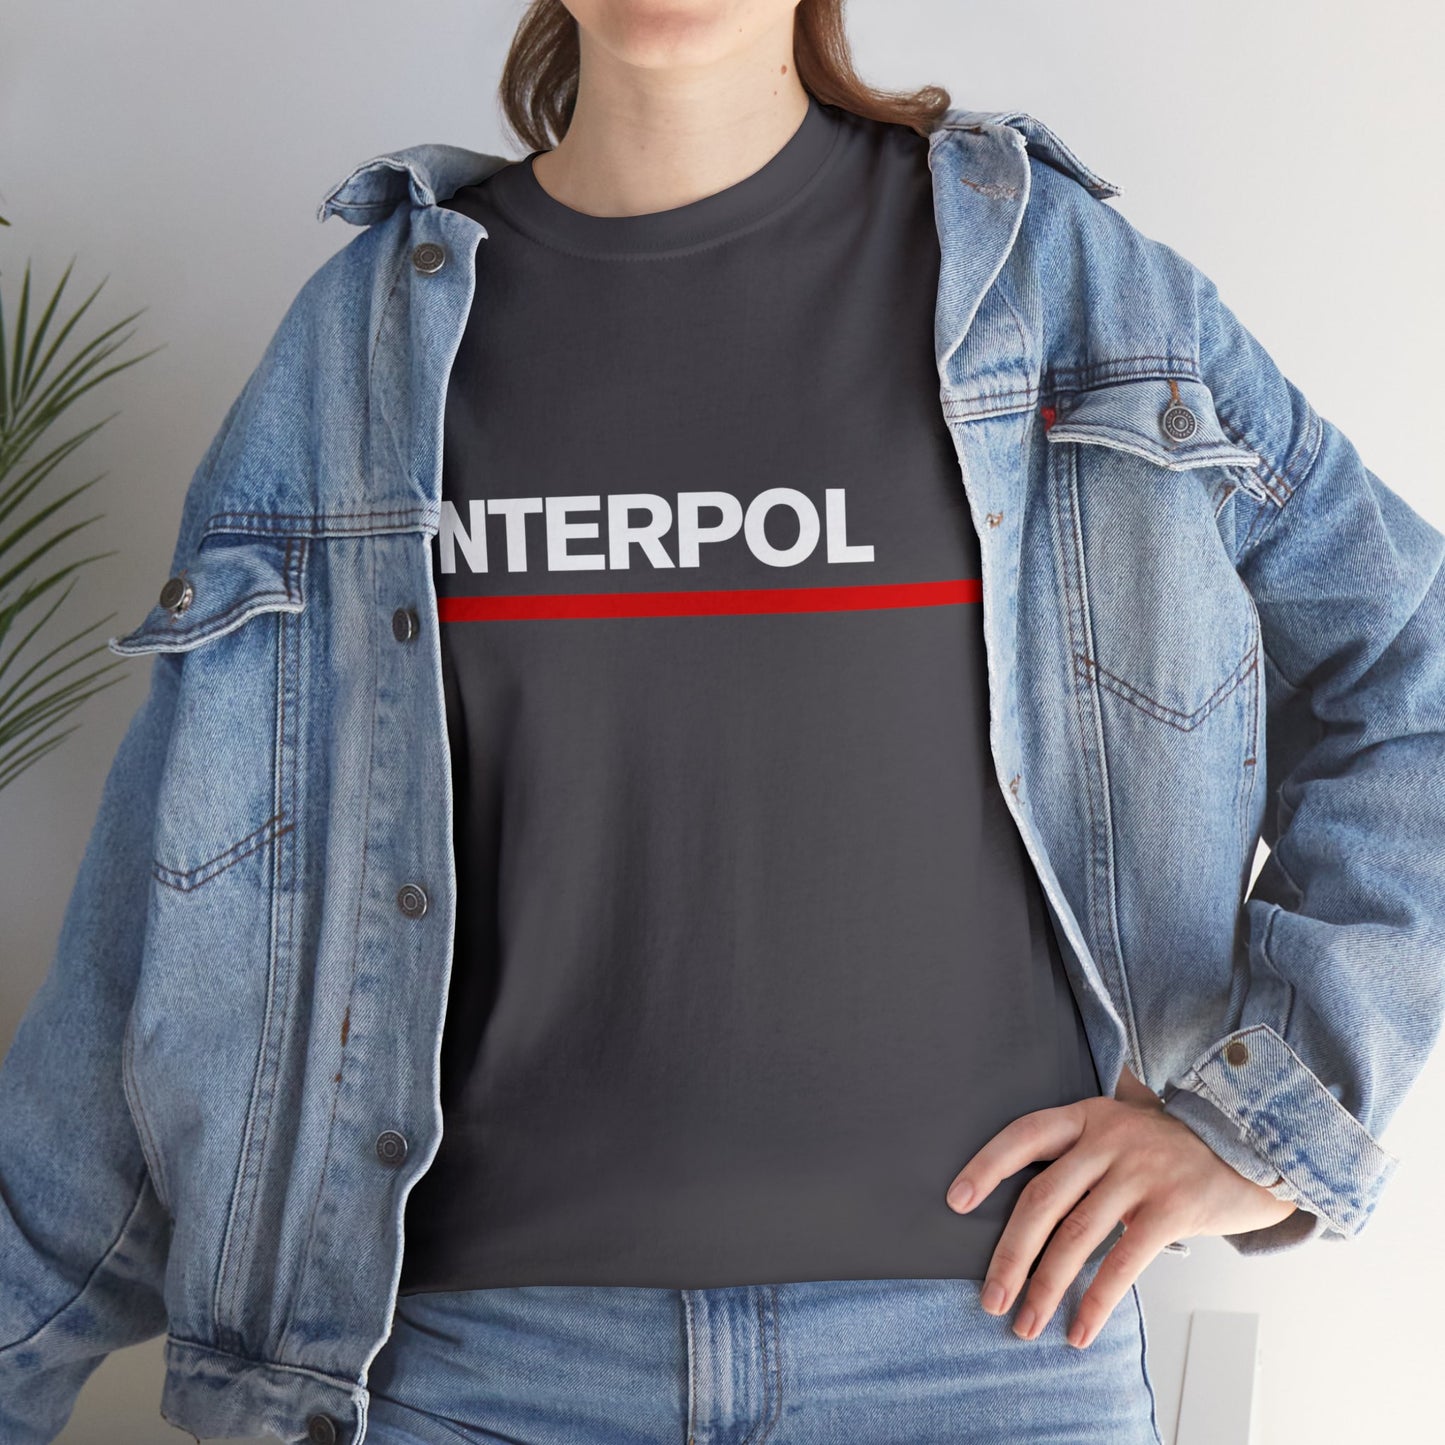 Interpol Tee